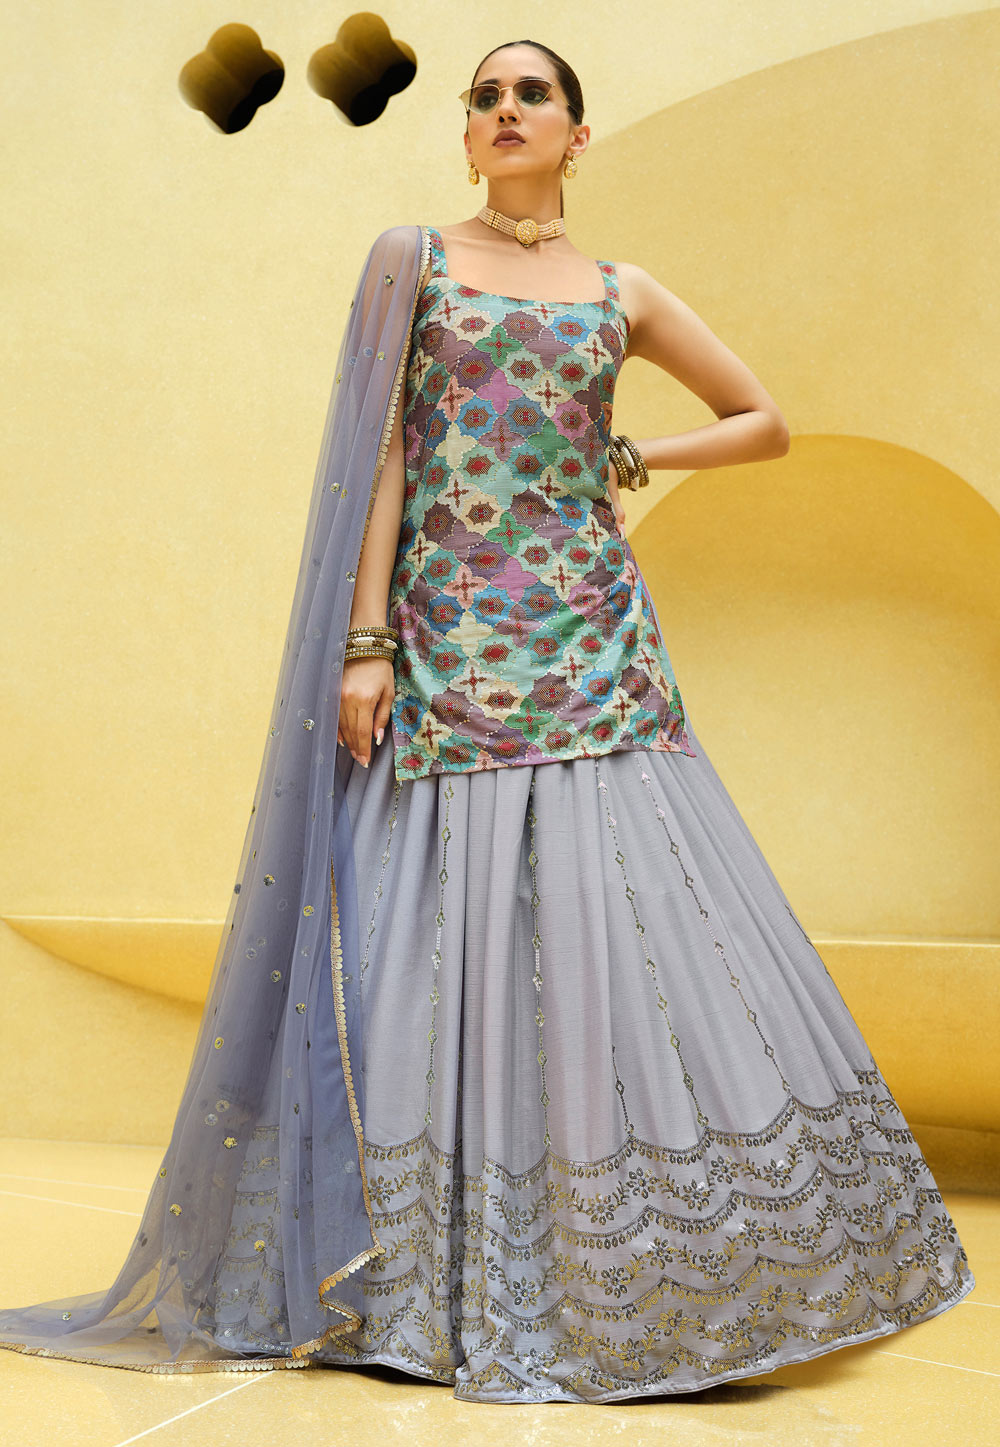 Partywear Designer Indo-Western Lehenga Choli at Rs 8995.00 | Surat| ID:  2850519661962